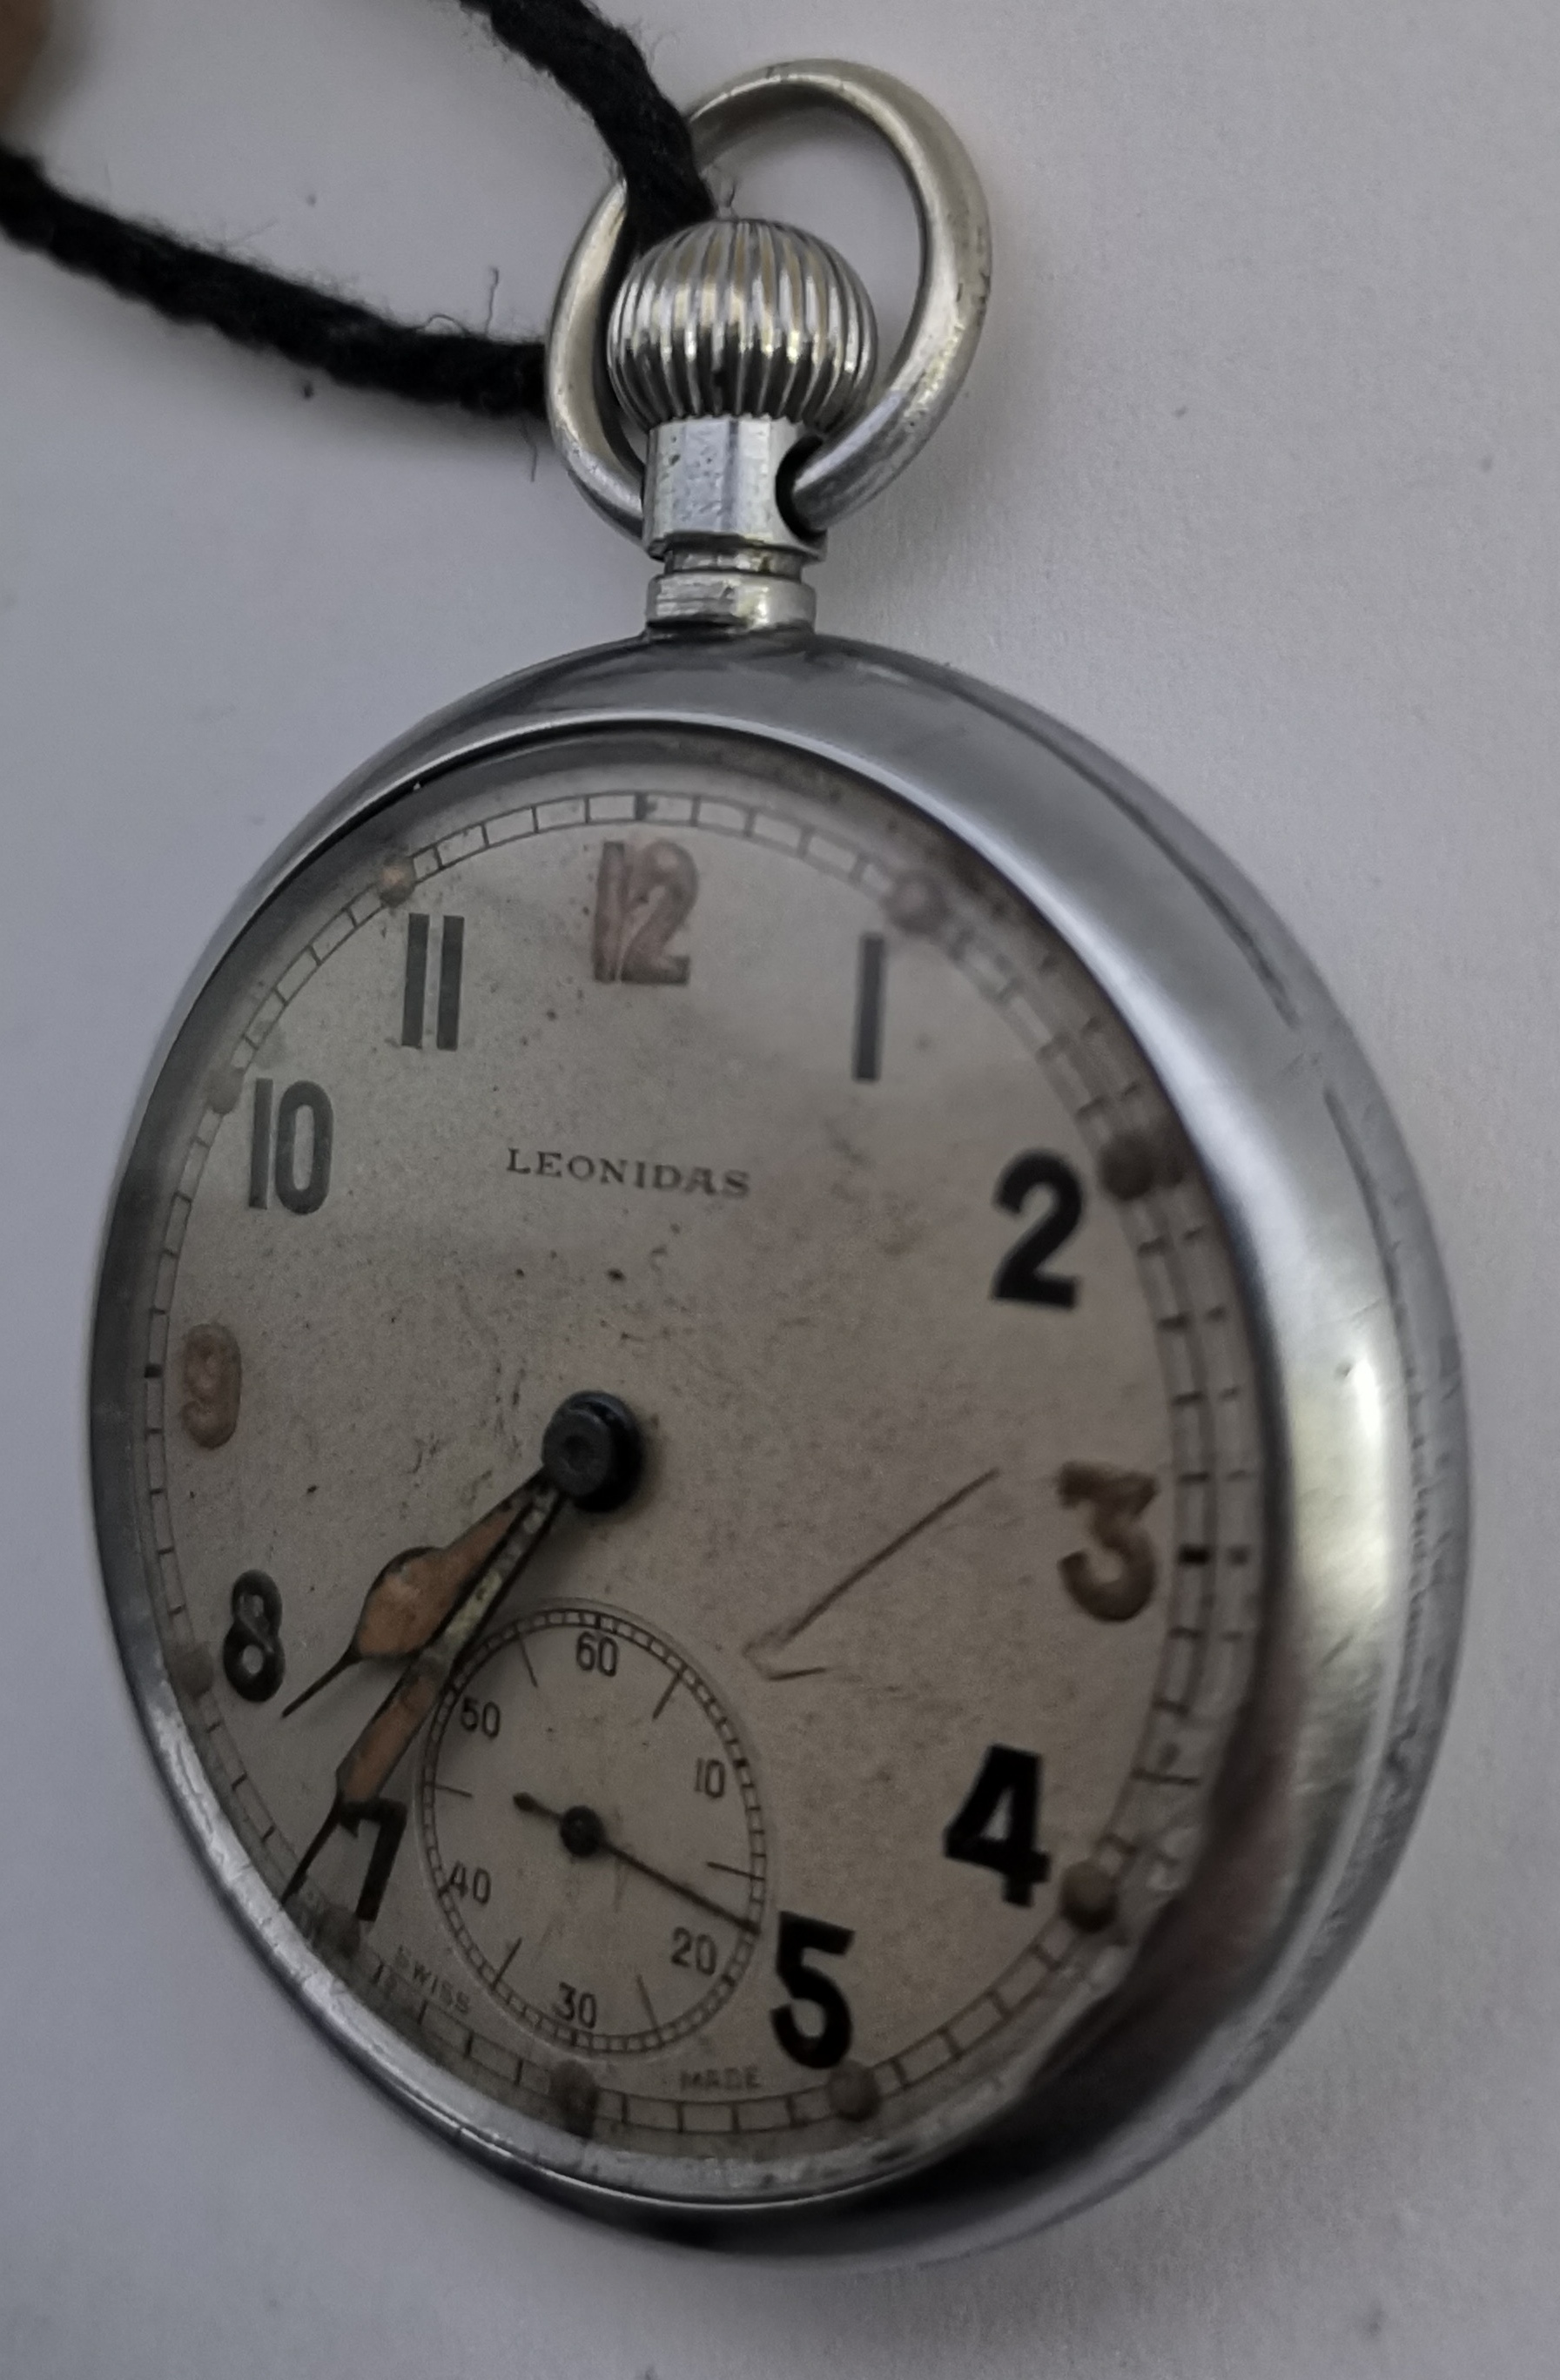 WW2 Leonidas Military Pocket Watch - Image 2 of 3